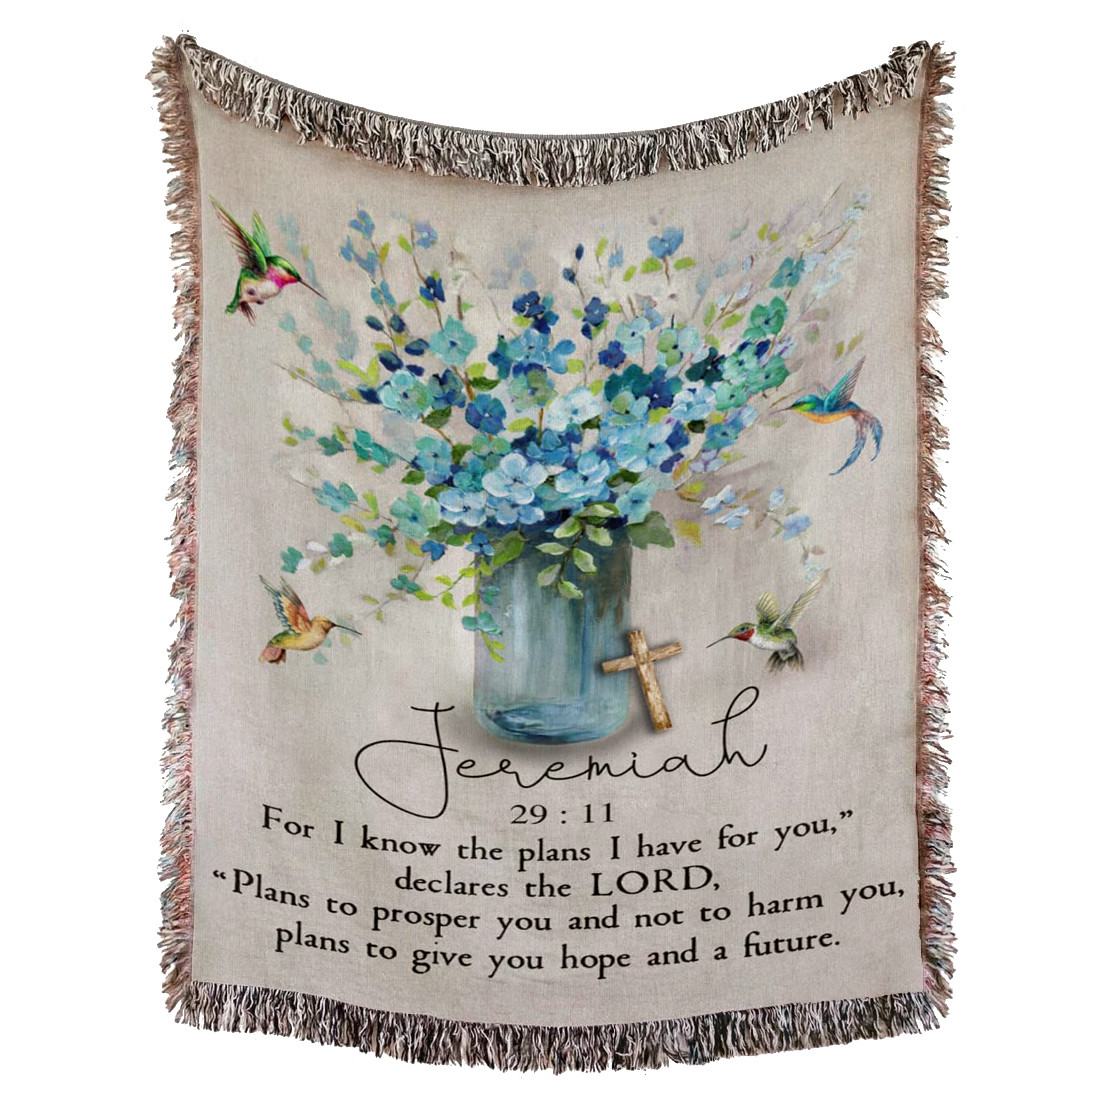 Jeremiah 29:11 Woven Blanket - The Plans I Have For You Christian Woven Blanket - Hummingbird Flowers Tapestry Decor For Christian Blanket